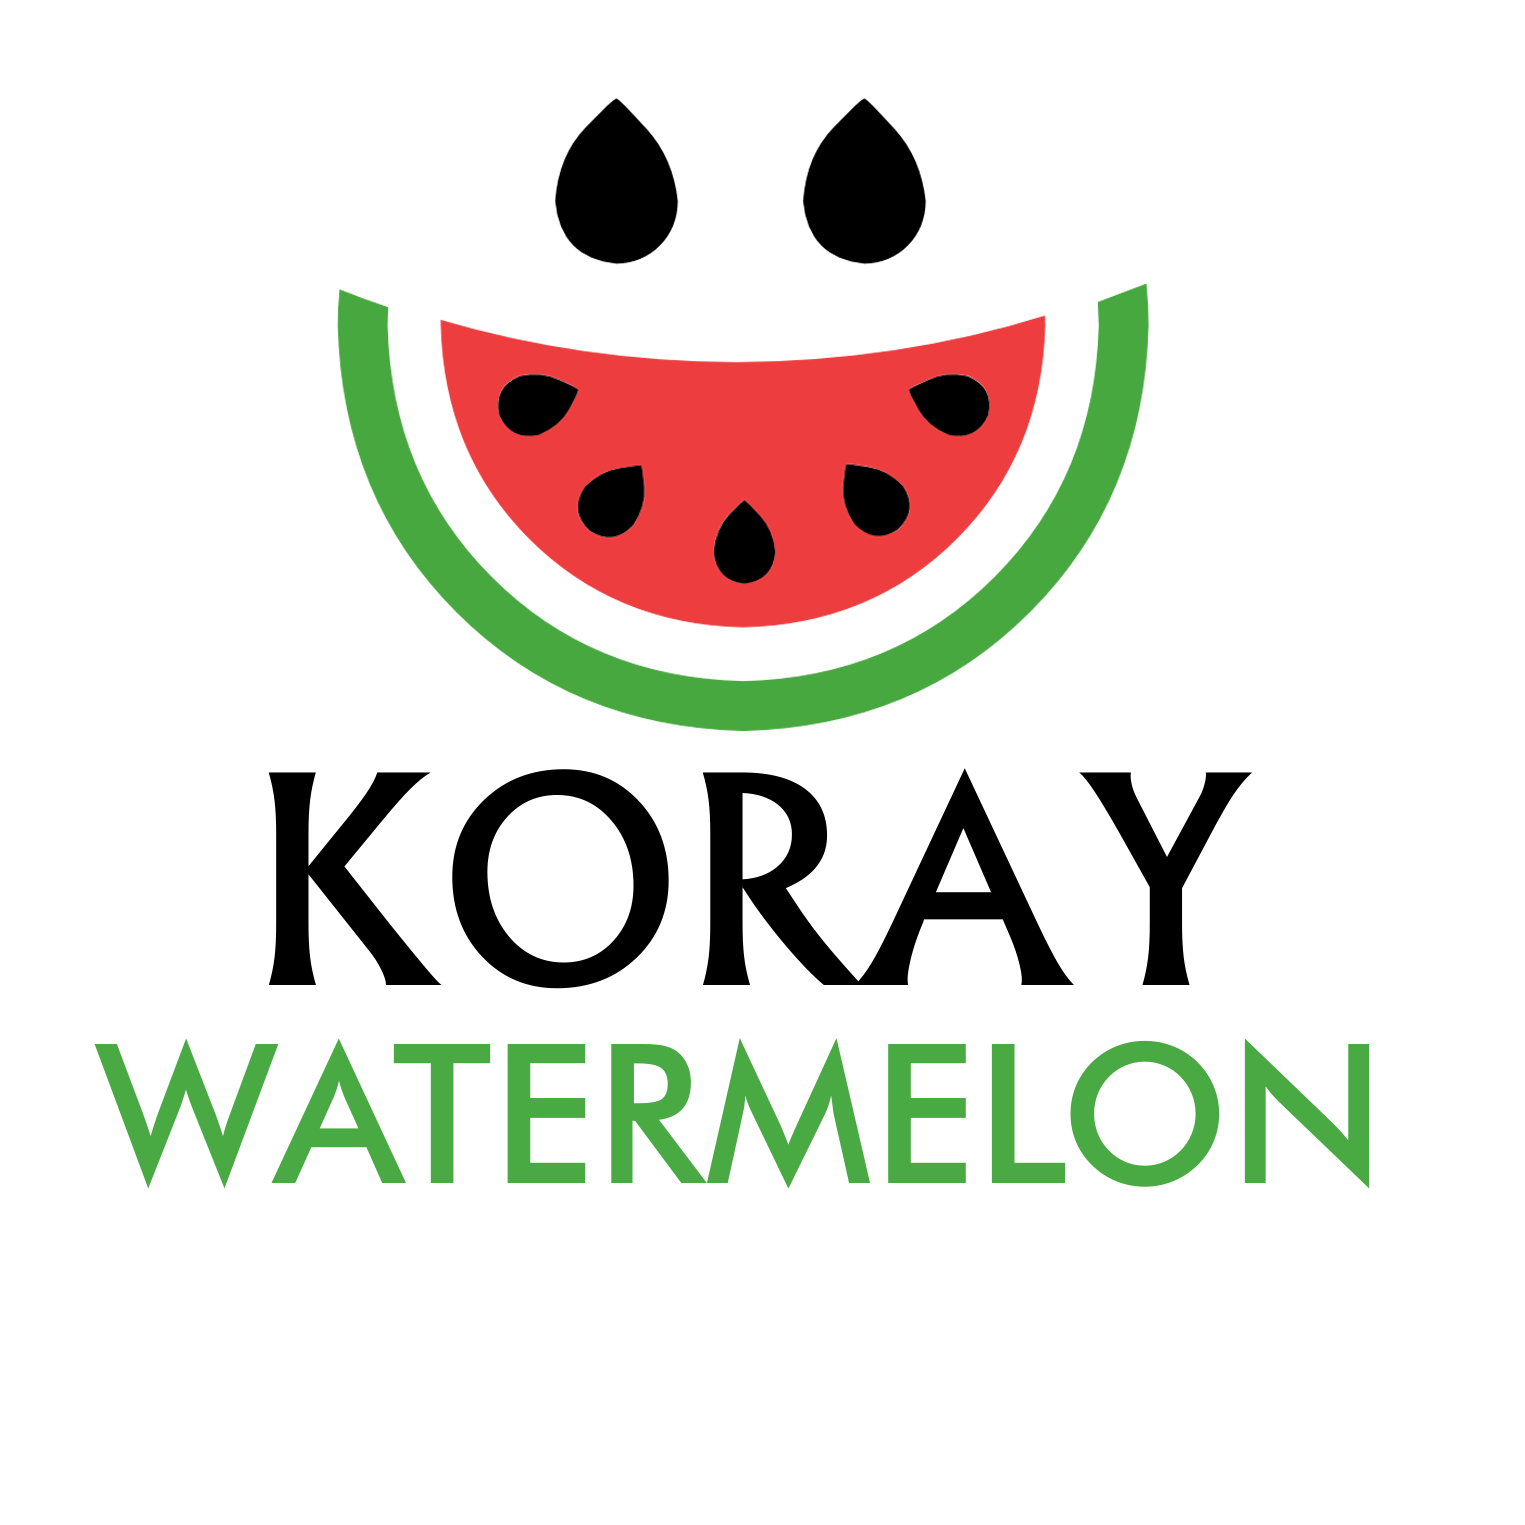 Koray Watermelon